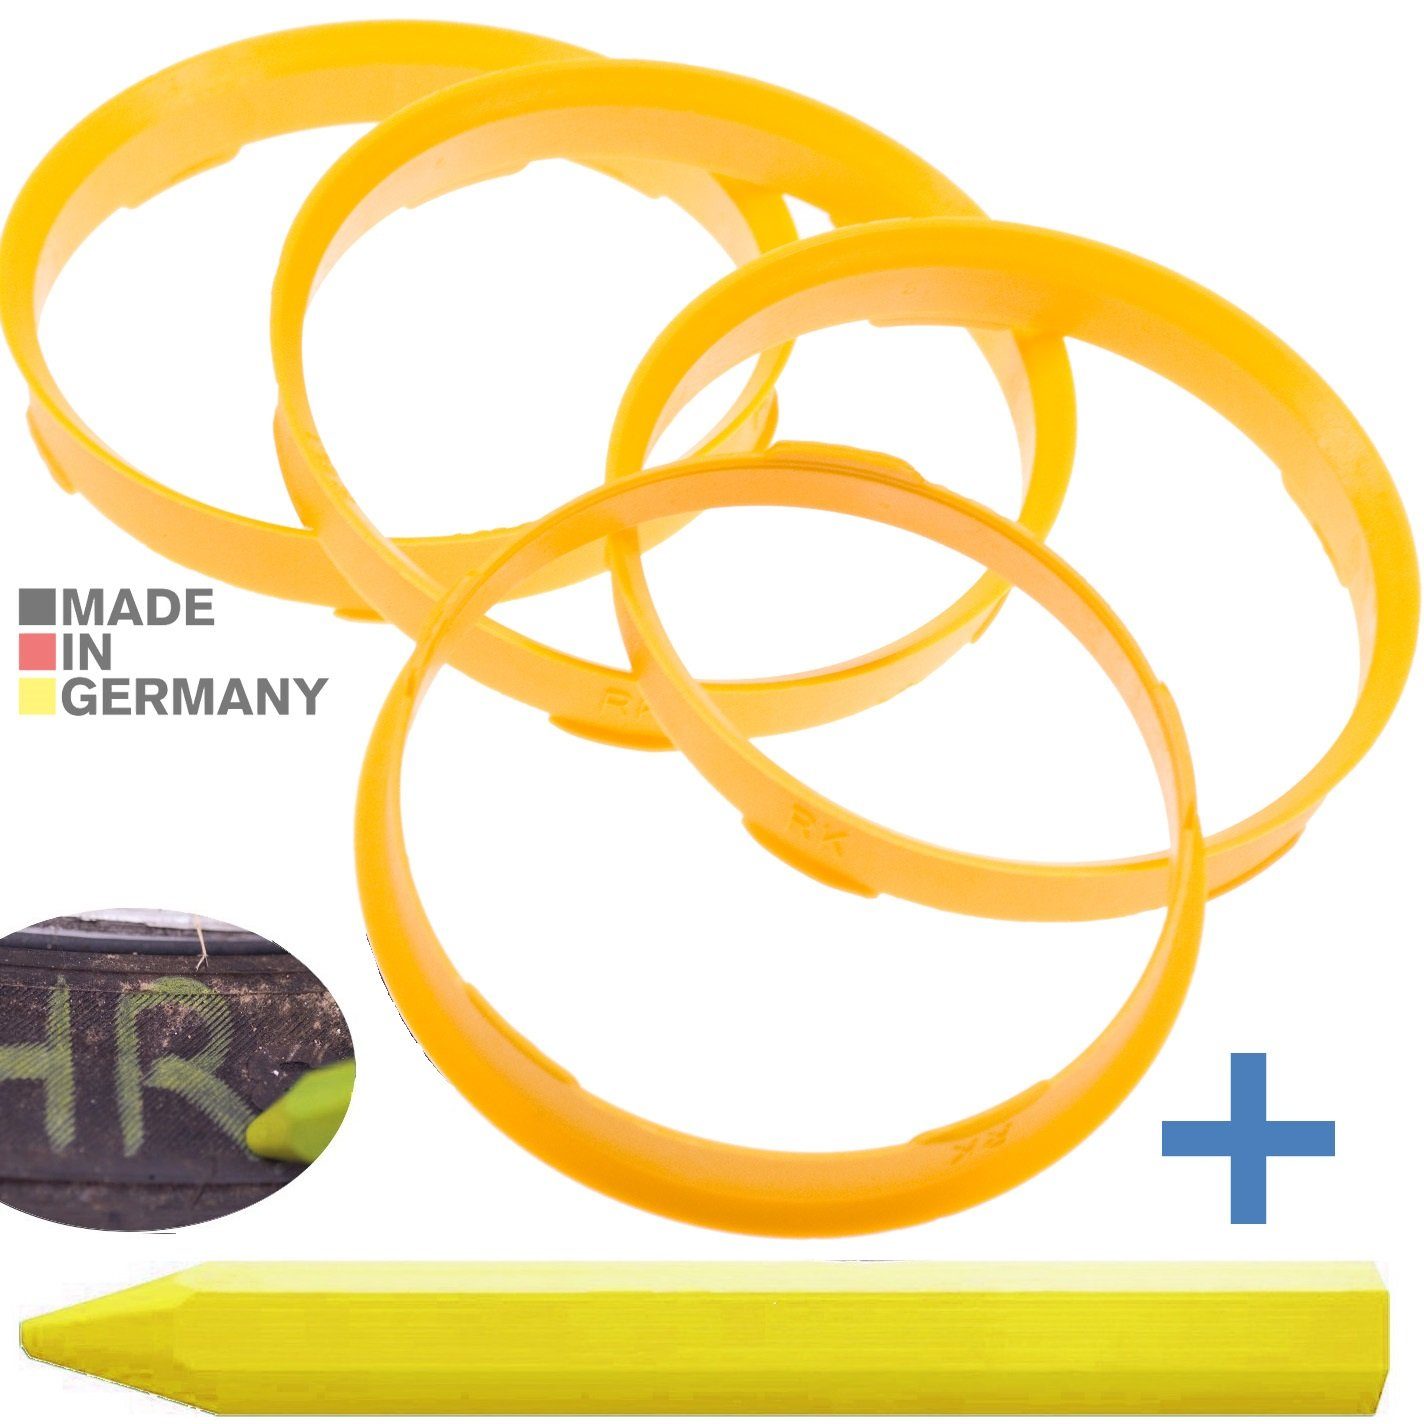 RKC Reifenstift 4X Zentrierringe Gelb Felgen Ringe + 1x Reifen Kreide Fett Stift, Maße: 67,0 x 65,1 mm | Reifenstifte